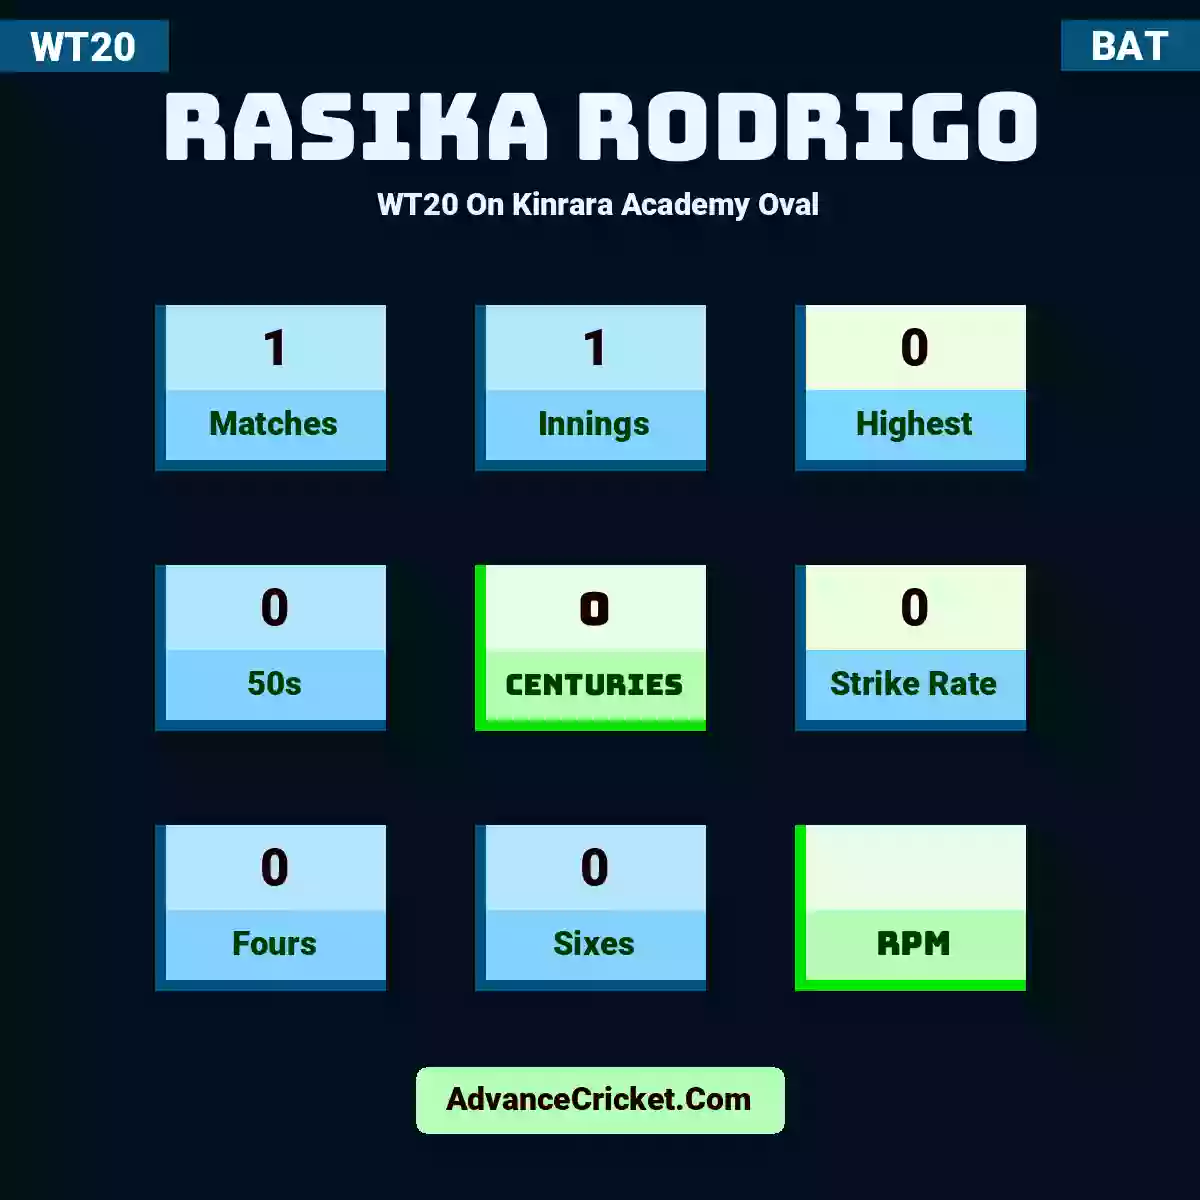 Rasika Rodrigo WT20  On Kinrara Academy Oval, Rasika Rodrigo played 1 matches, scored 0 runs as highest, 0 half-centuries, and 0 centuries, with a strike rate of 0. R.Rodrigo hit 0 fours and 0 sixes.